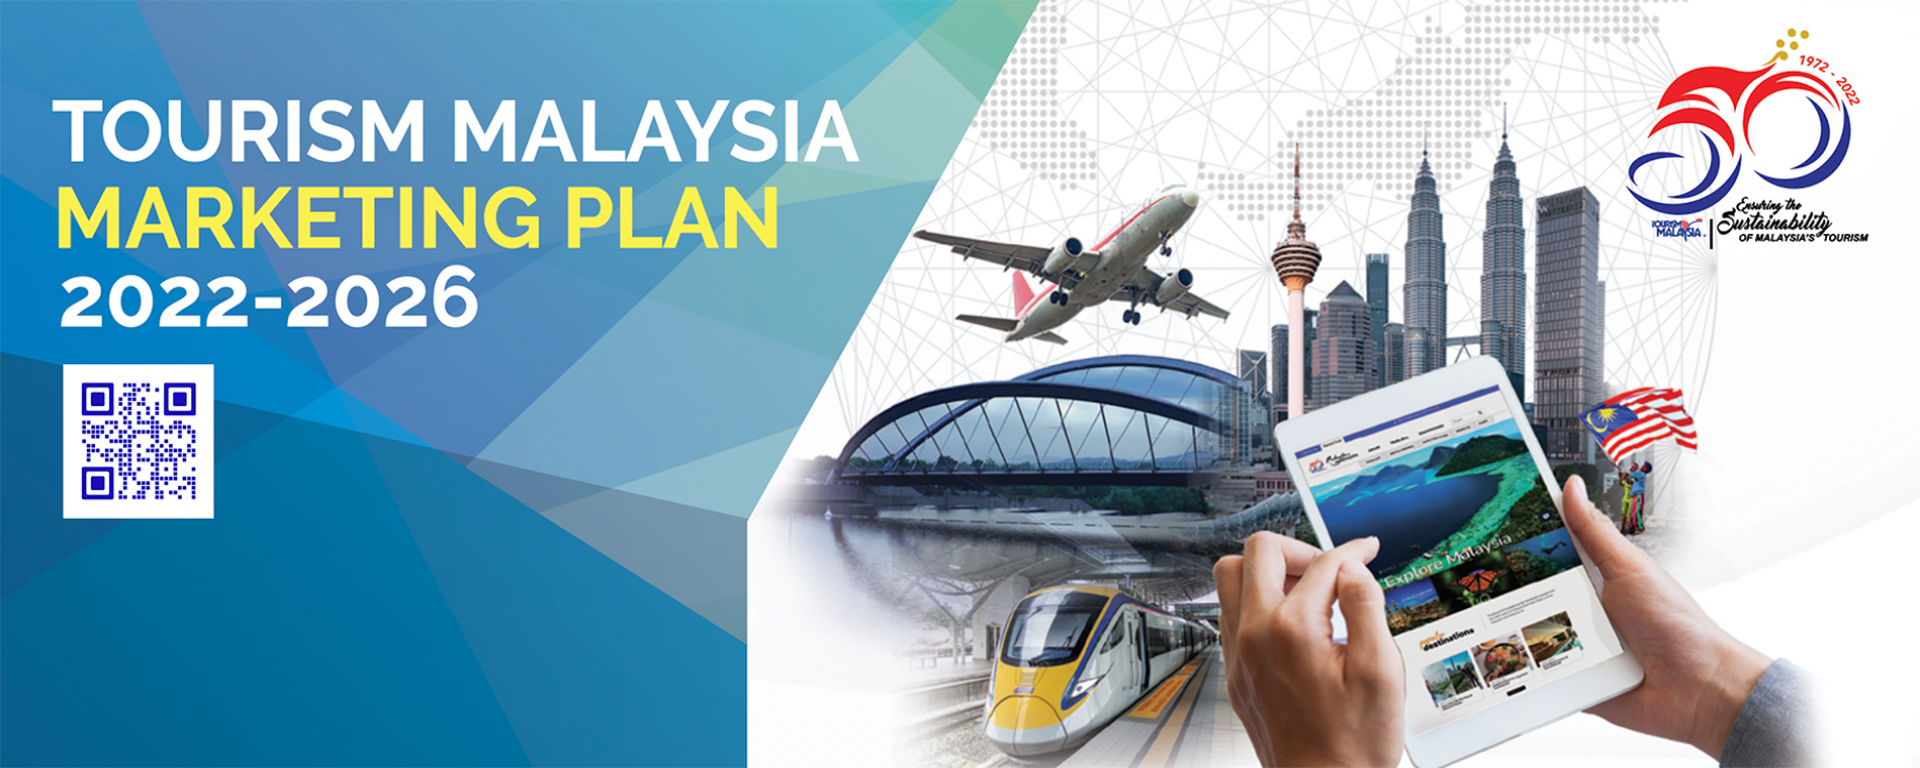 <div class=''><span class='caption'></span><div class='action '><a href='https://www.tourism.gov.my/files/uploads/TM_Marketing_Plan_2022_2026.pdf' class='btn btn-danger btn-lg' target=''>TOURISM MALAYSIA MARKETING PLAN 2022-2026</a></div></div>